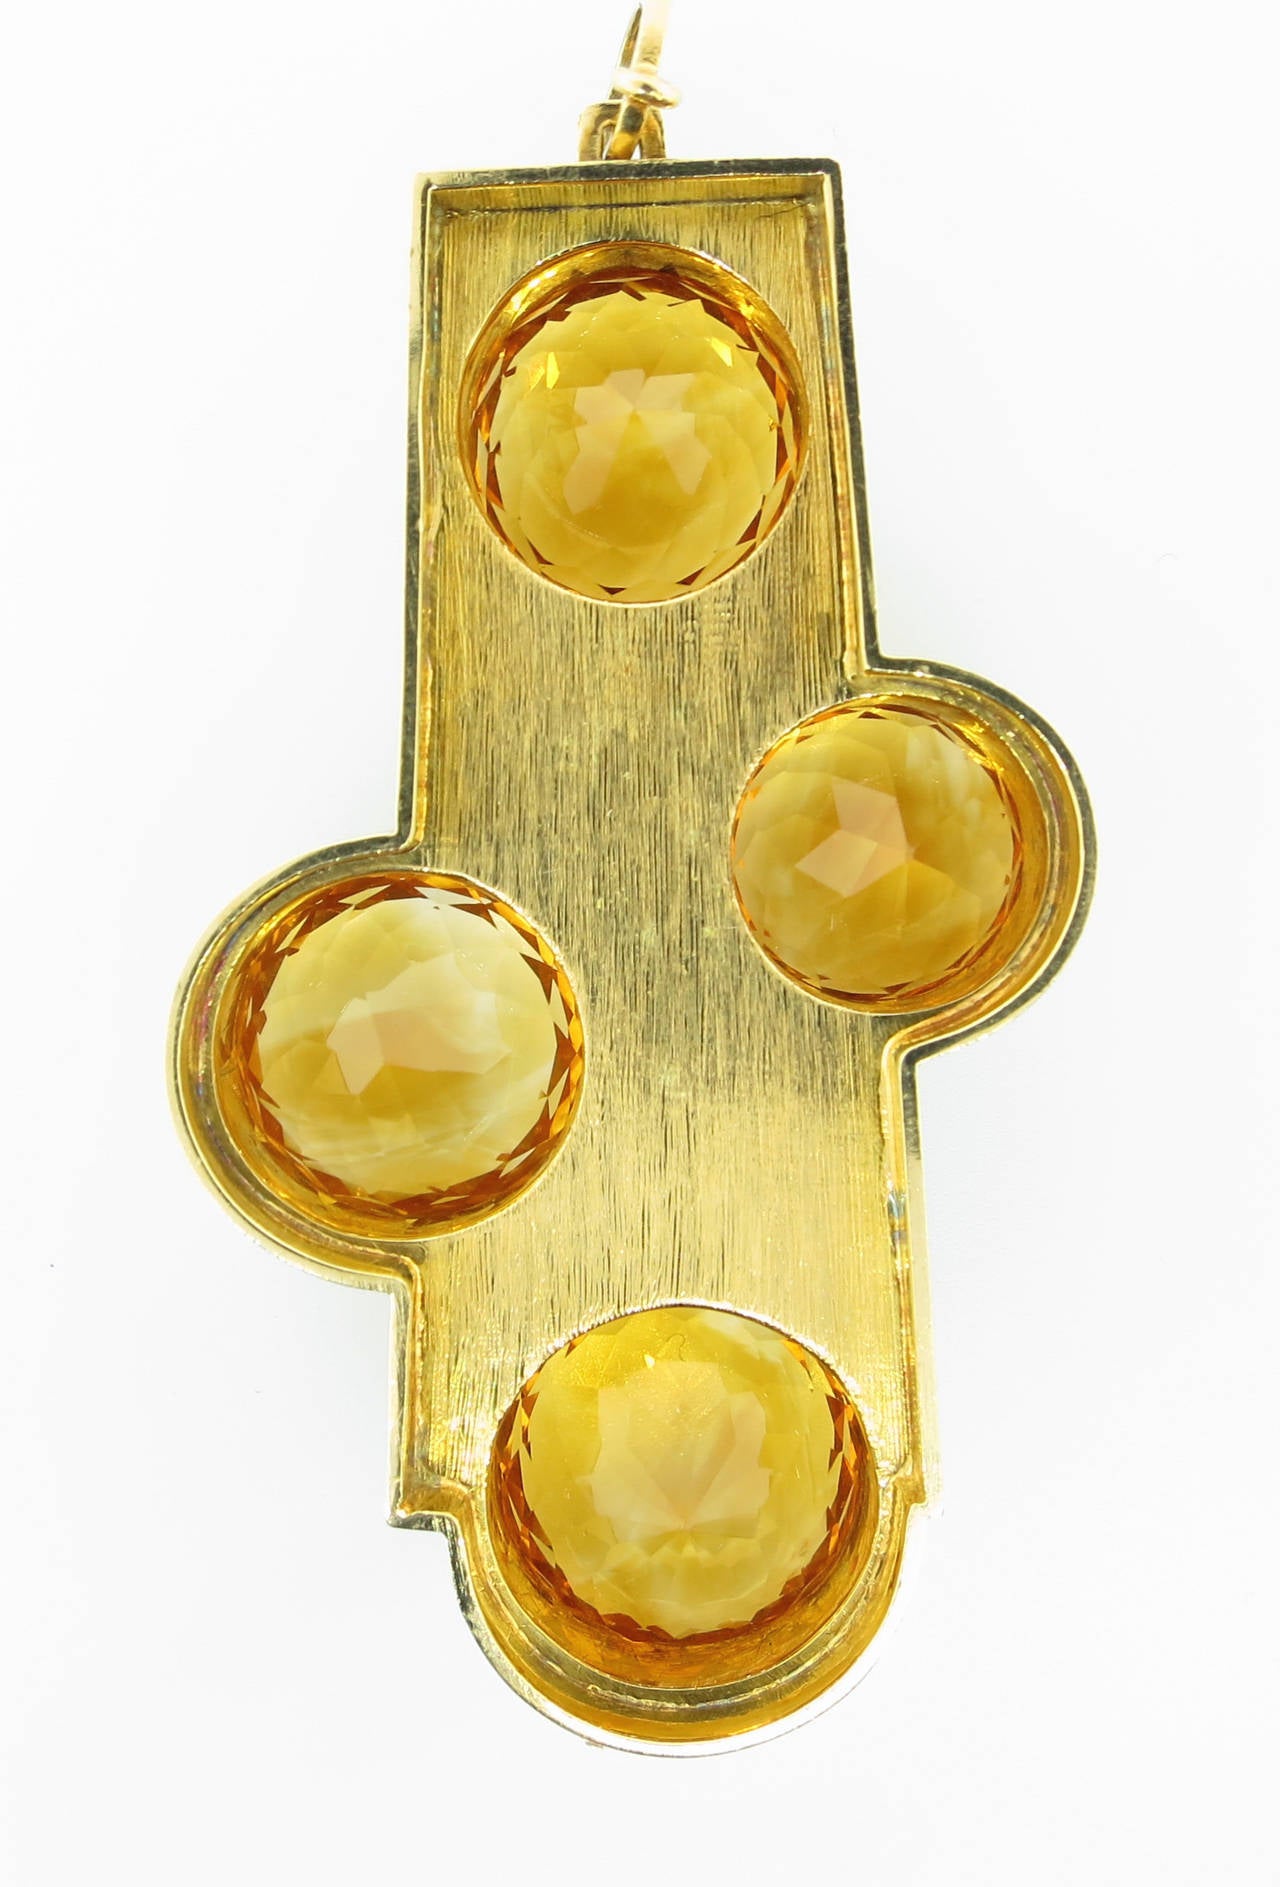 18kt. brushed gold finish citrine pendant by the Brazilian designer Heraldo Burle Marx circa 1970. The pendant measures 2 1/2